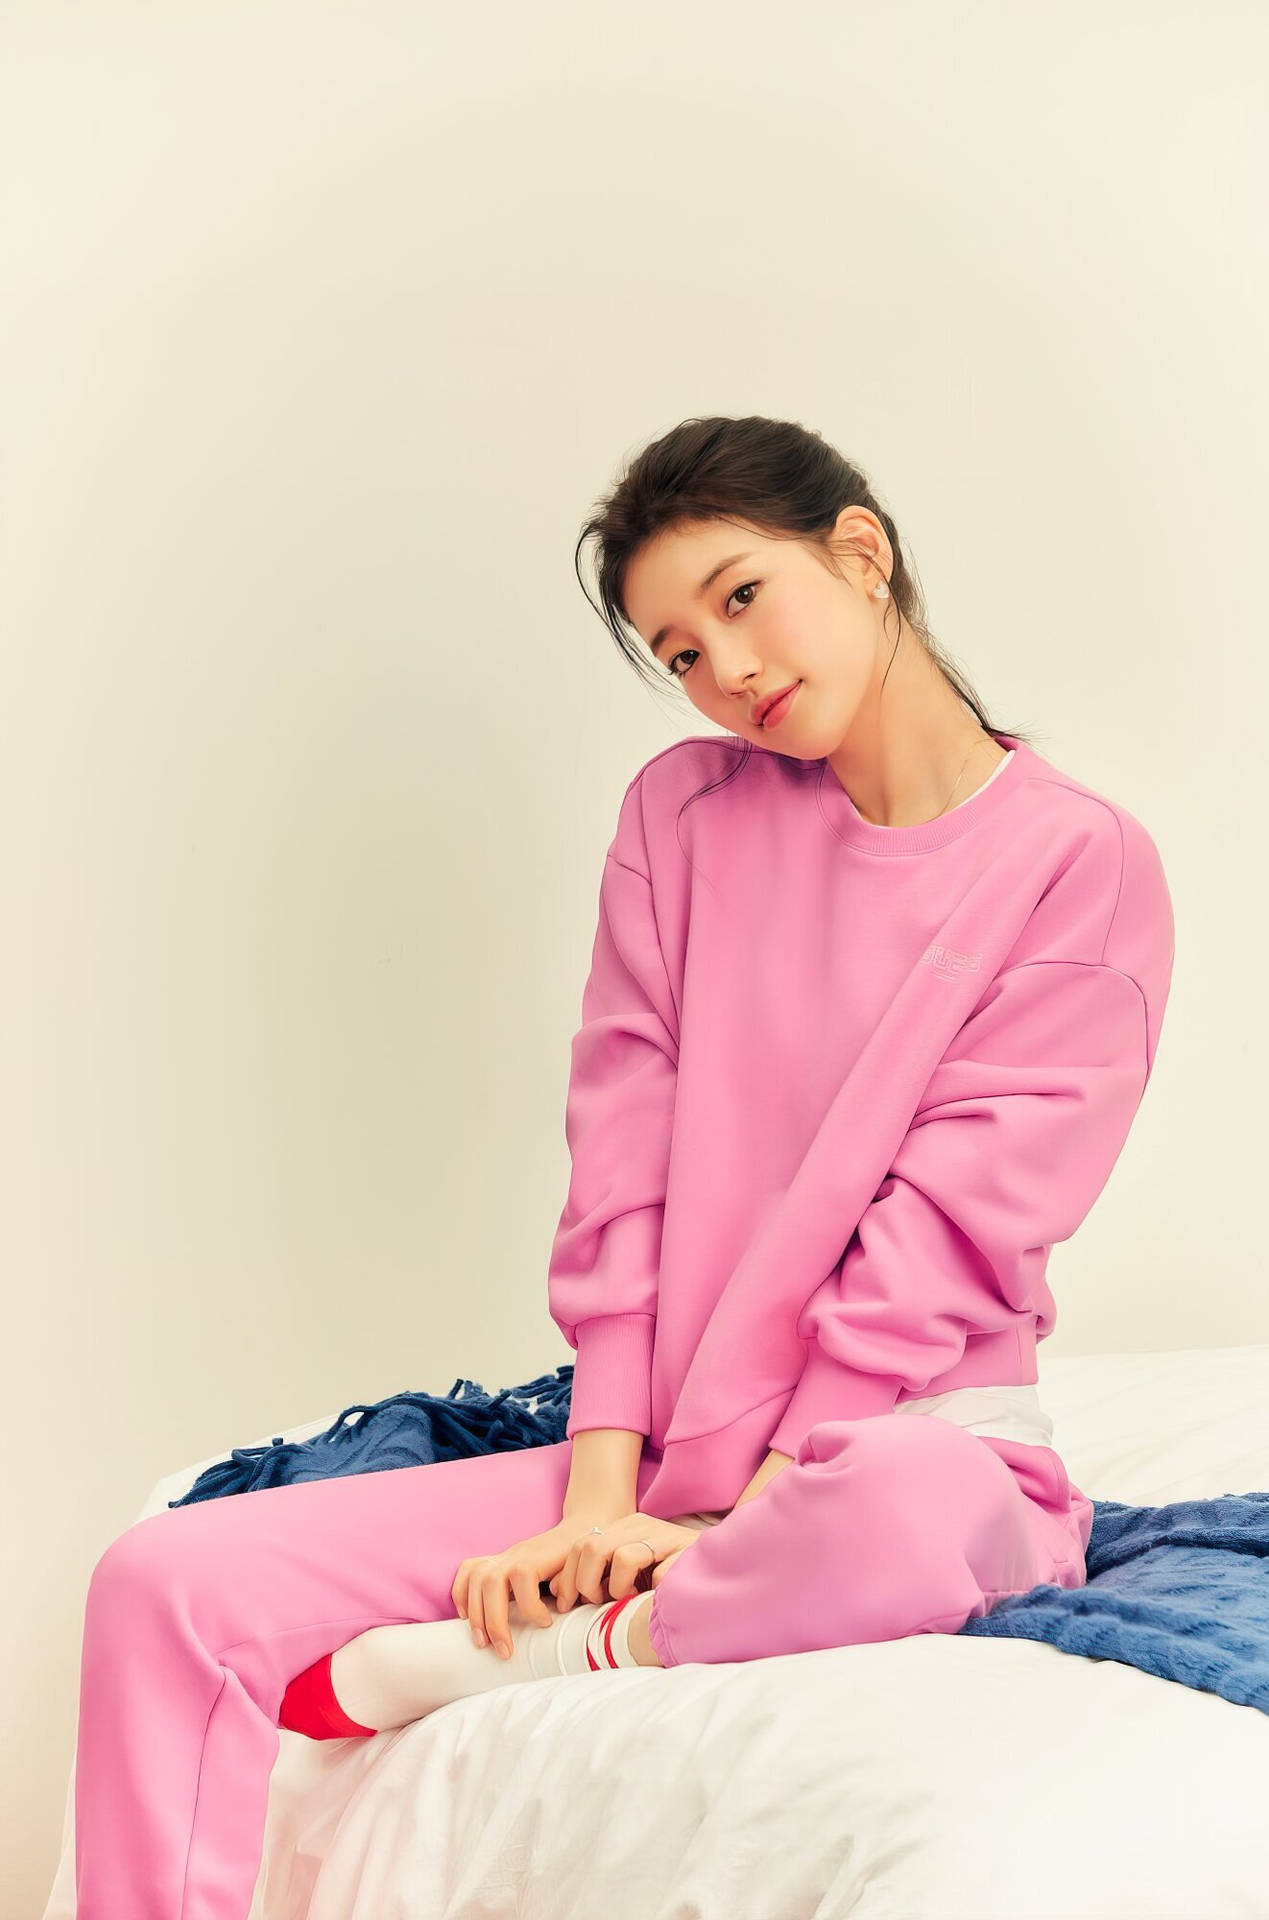 Bae Suzy In Cute Pajamas Wallpaper